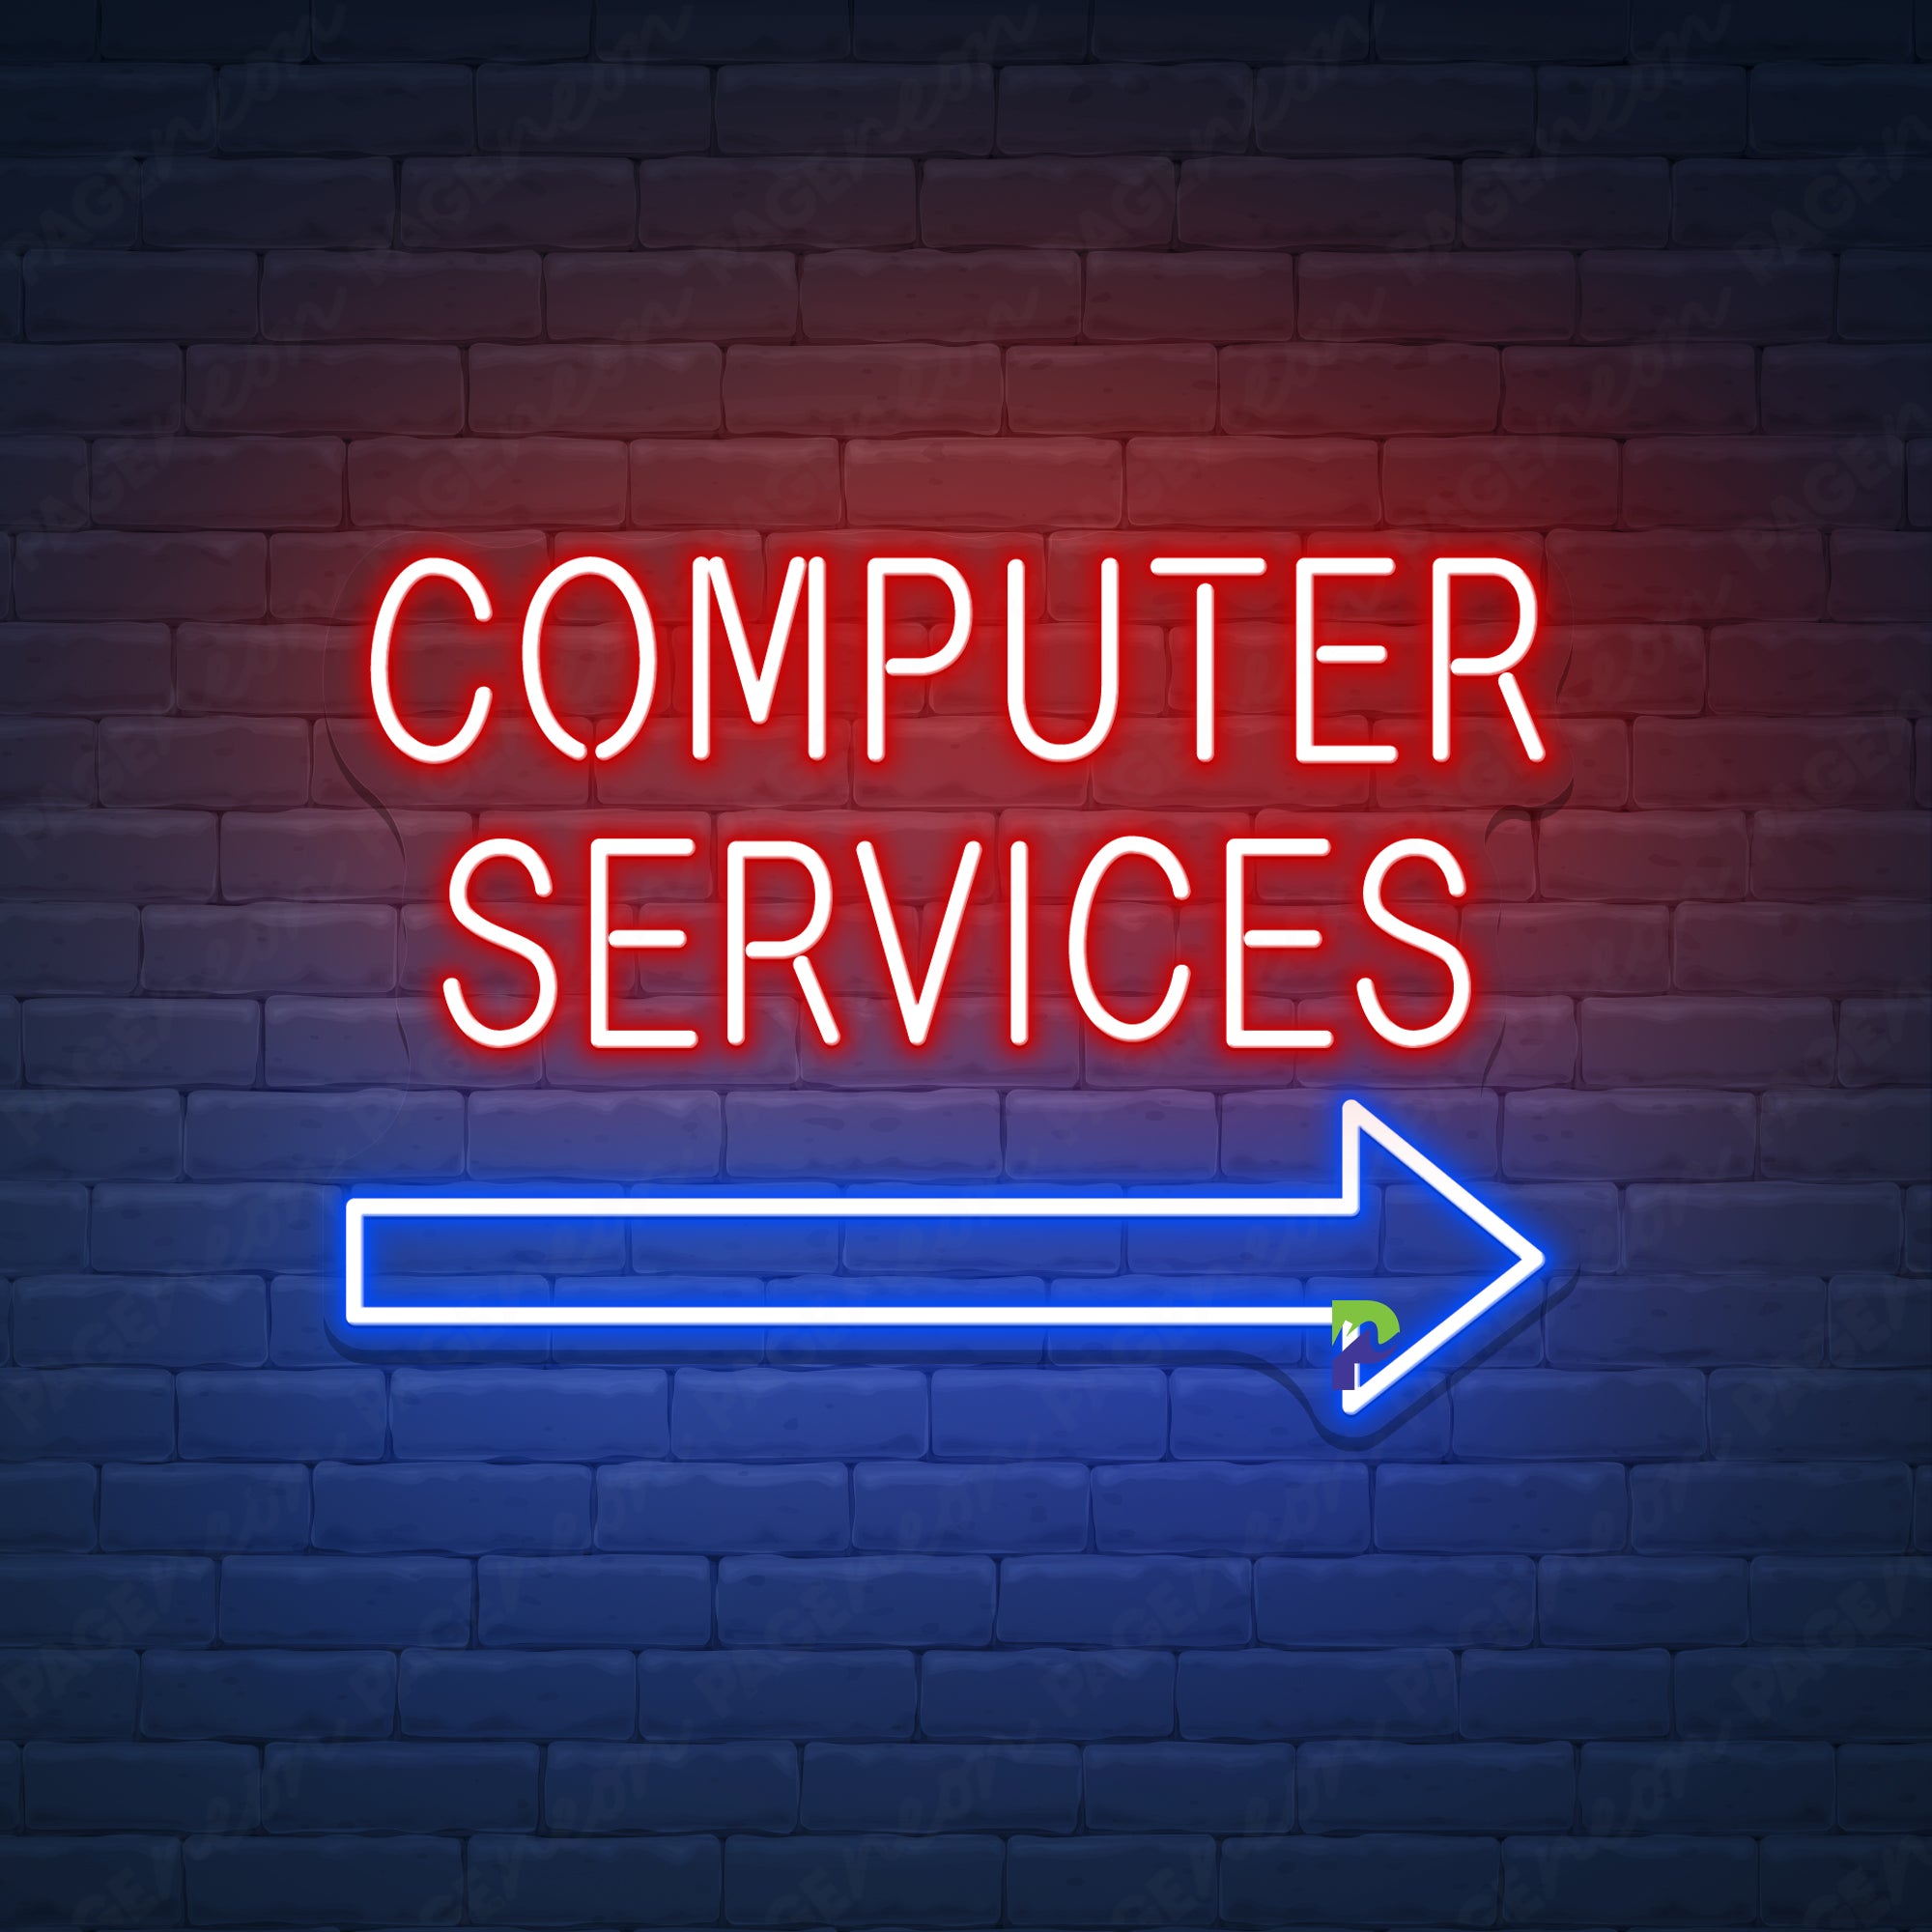 Computer Service Neon Signs Arrow Led Light